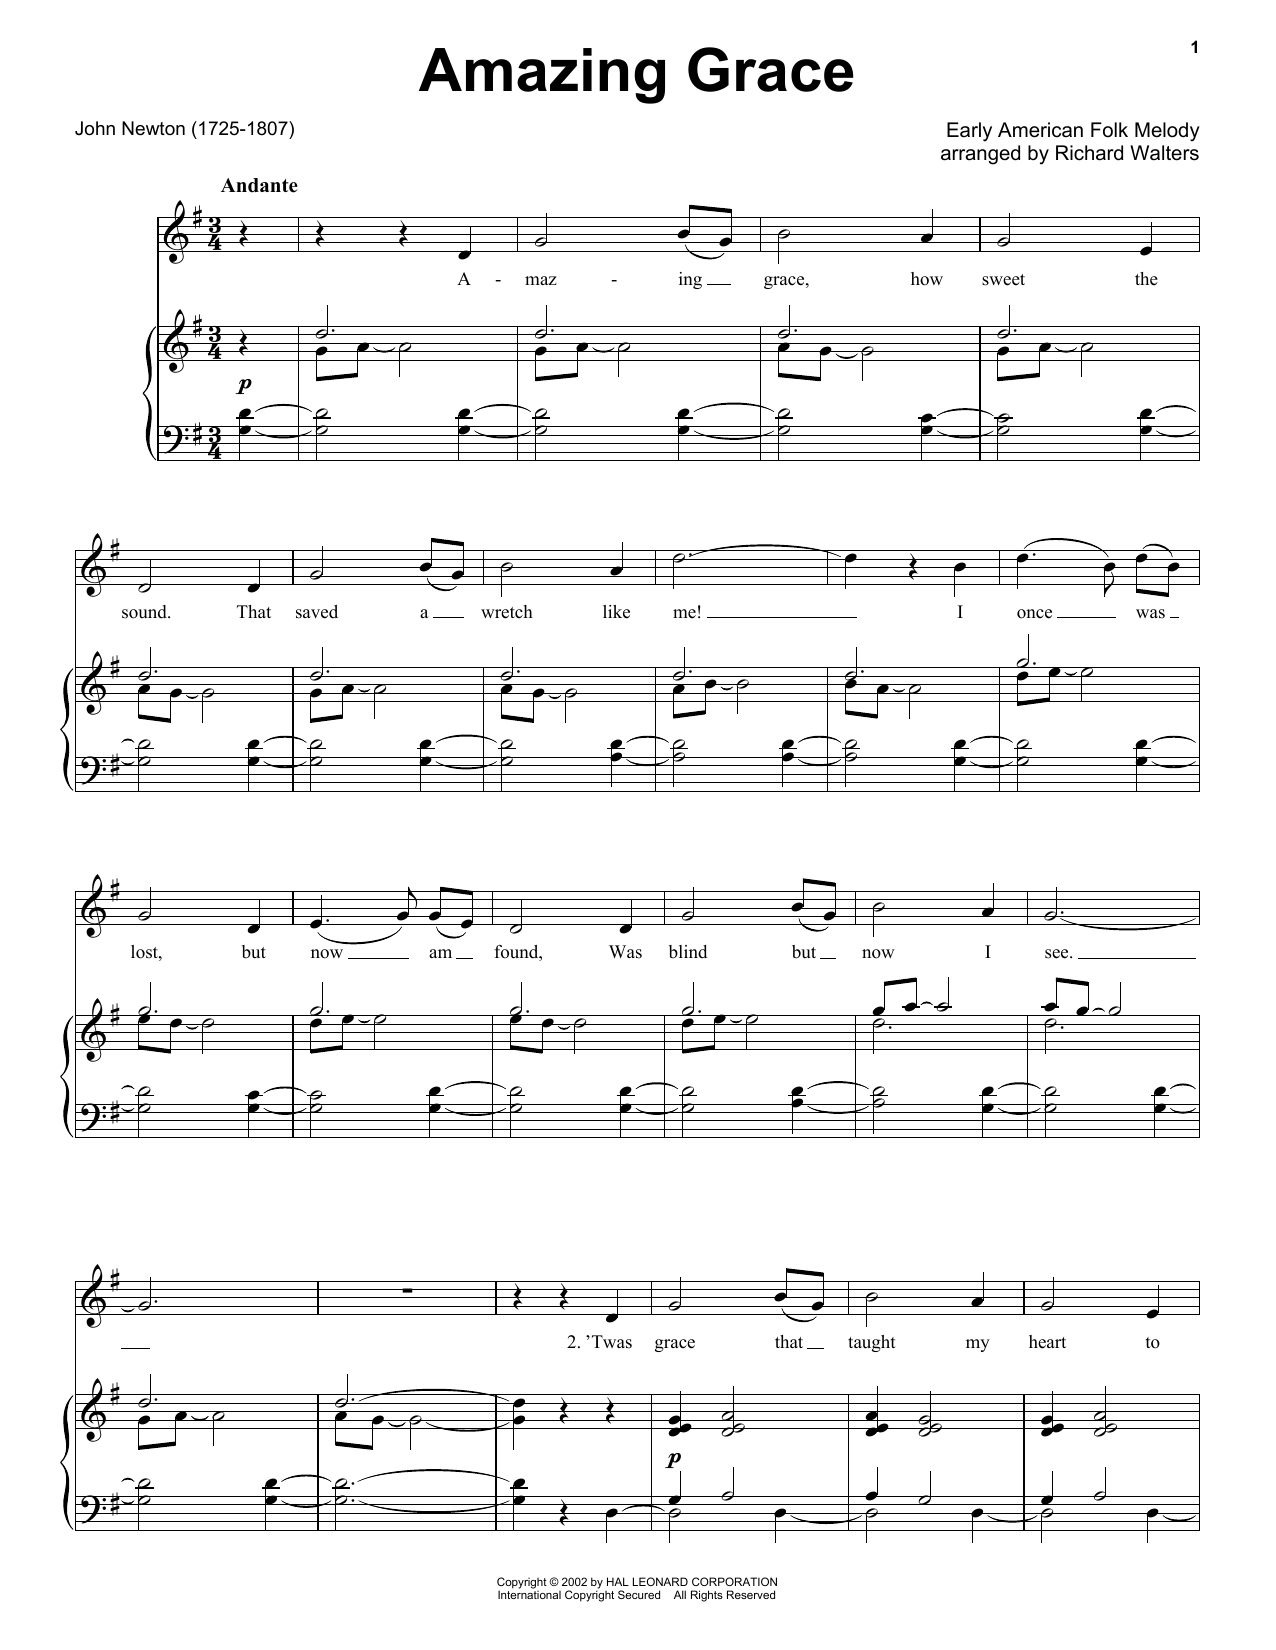 John Newton Amazing Grace Sheet Music Notes & Chords for Violin - Download or Print PDF